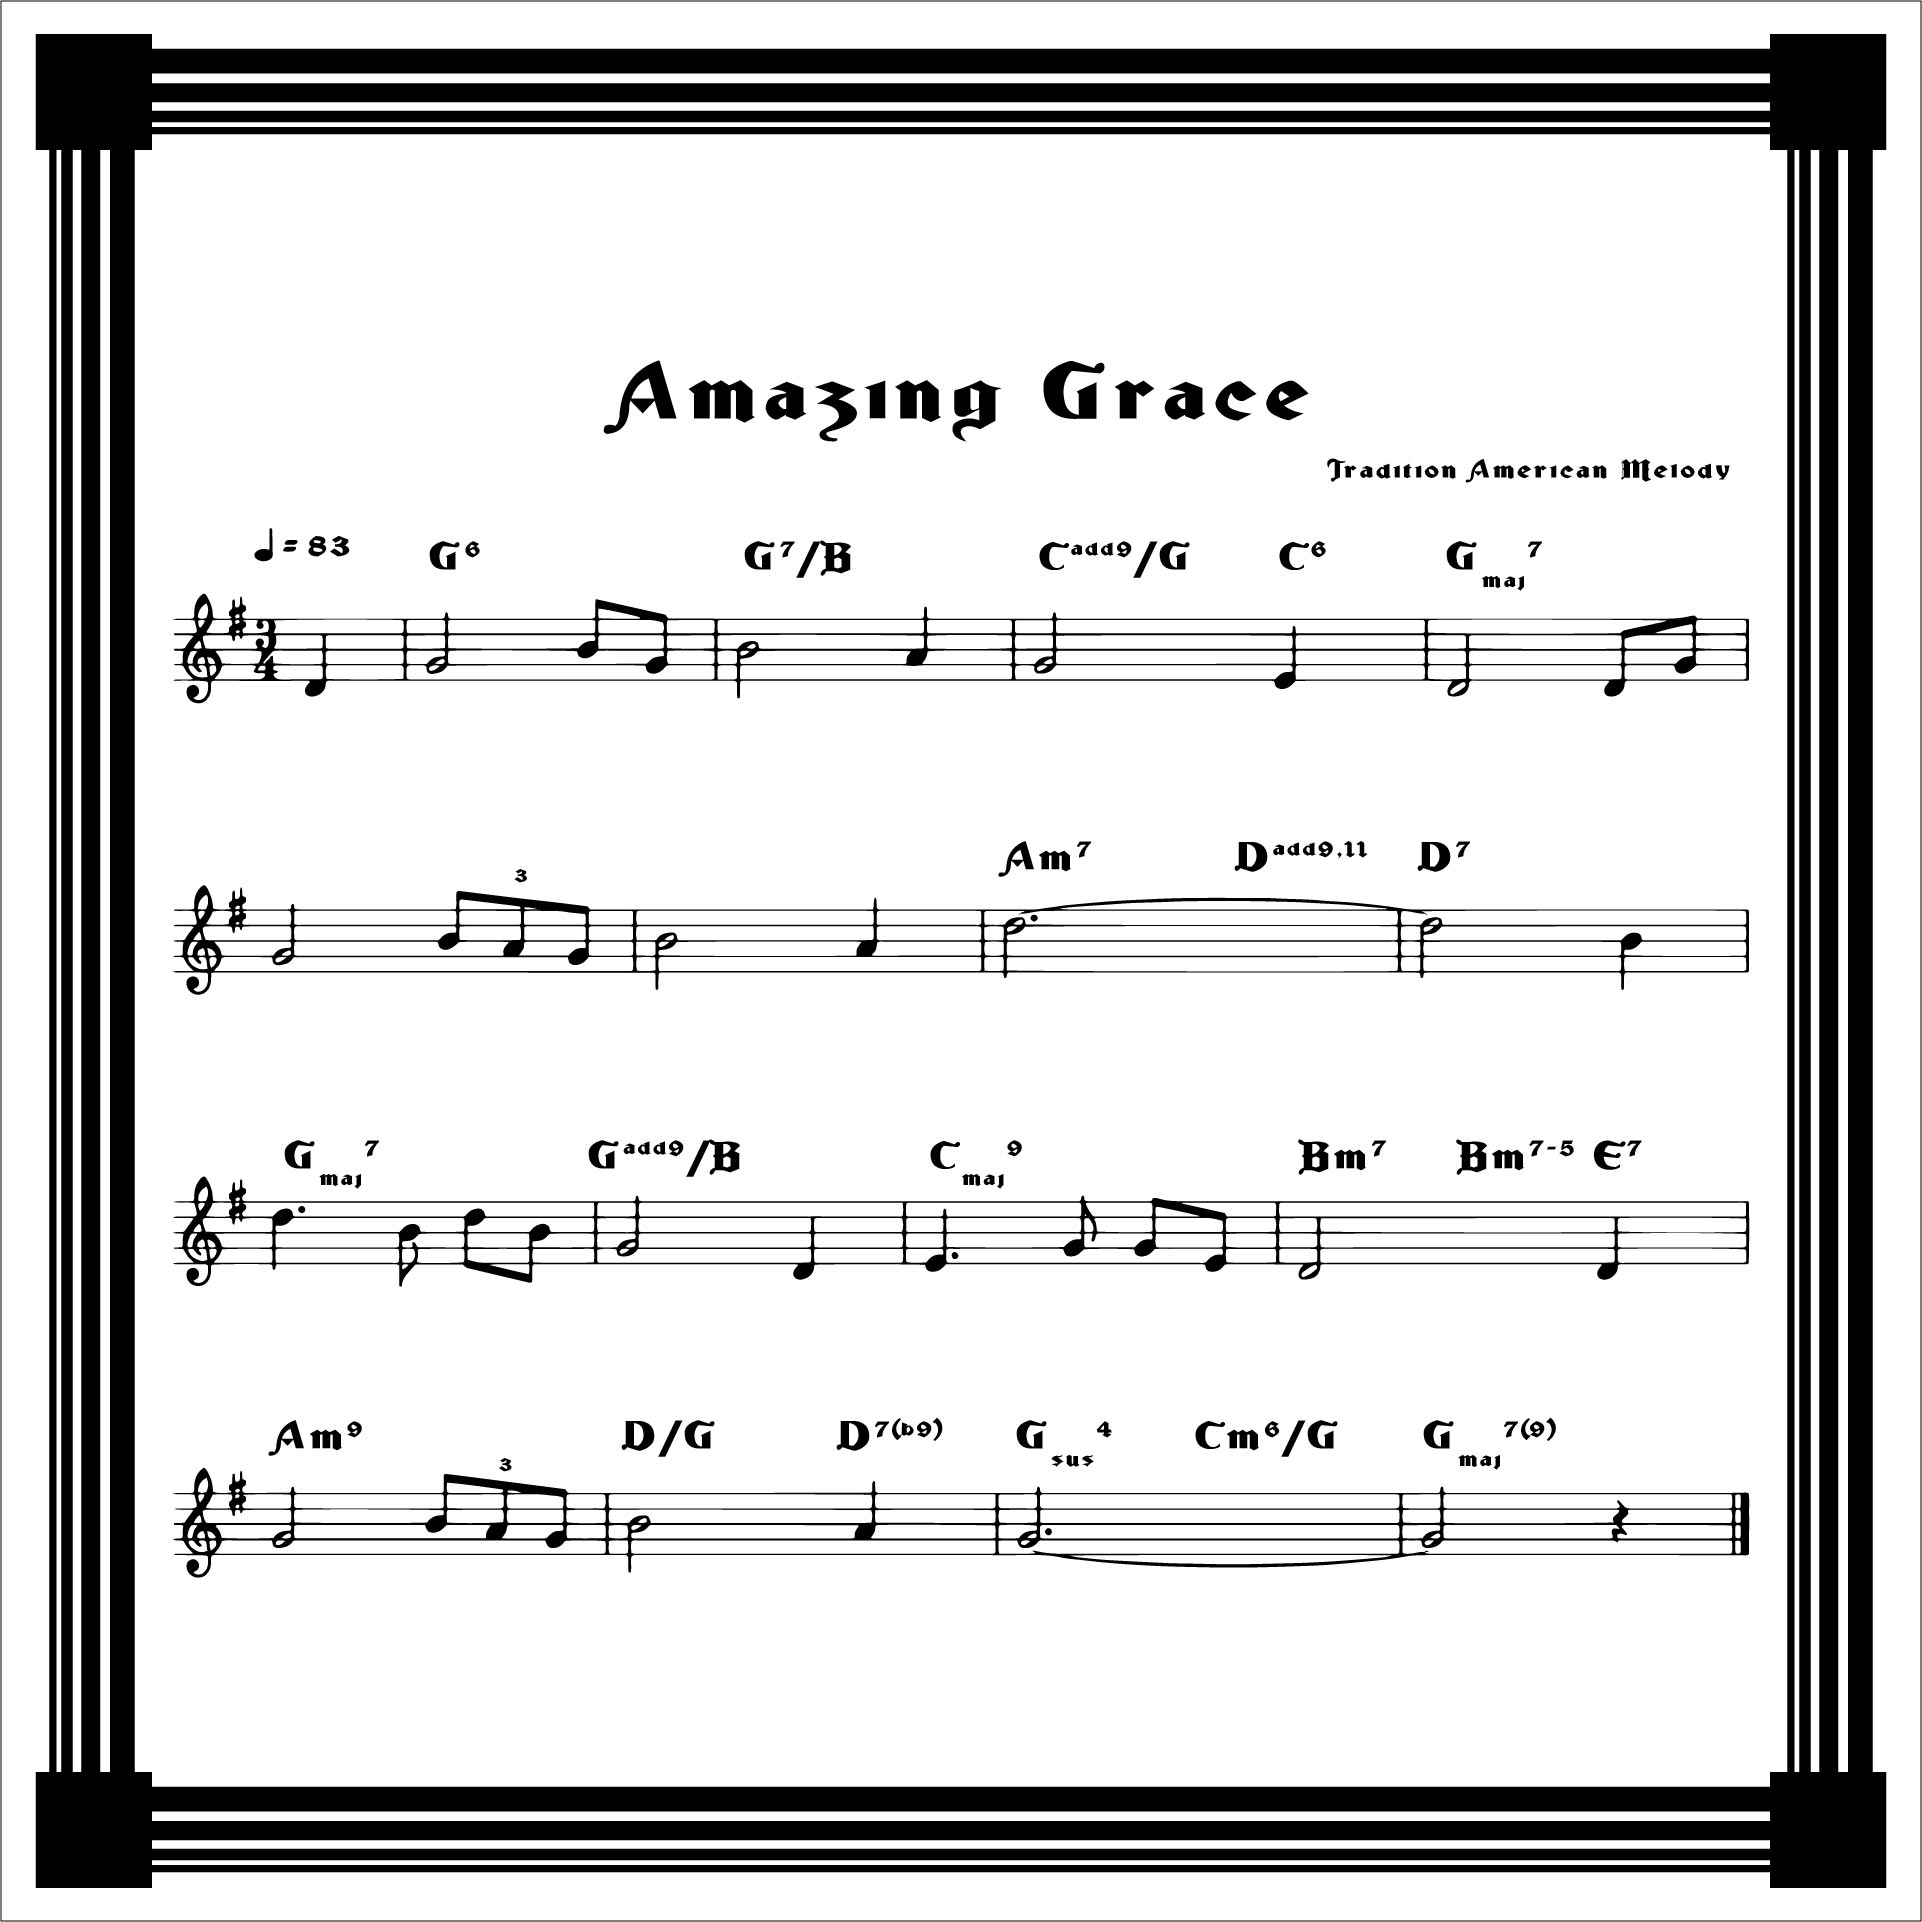 5 Best Images of Amazing Grace Sheet Music Printable Amazing Grace